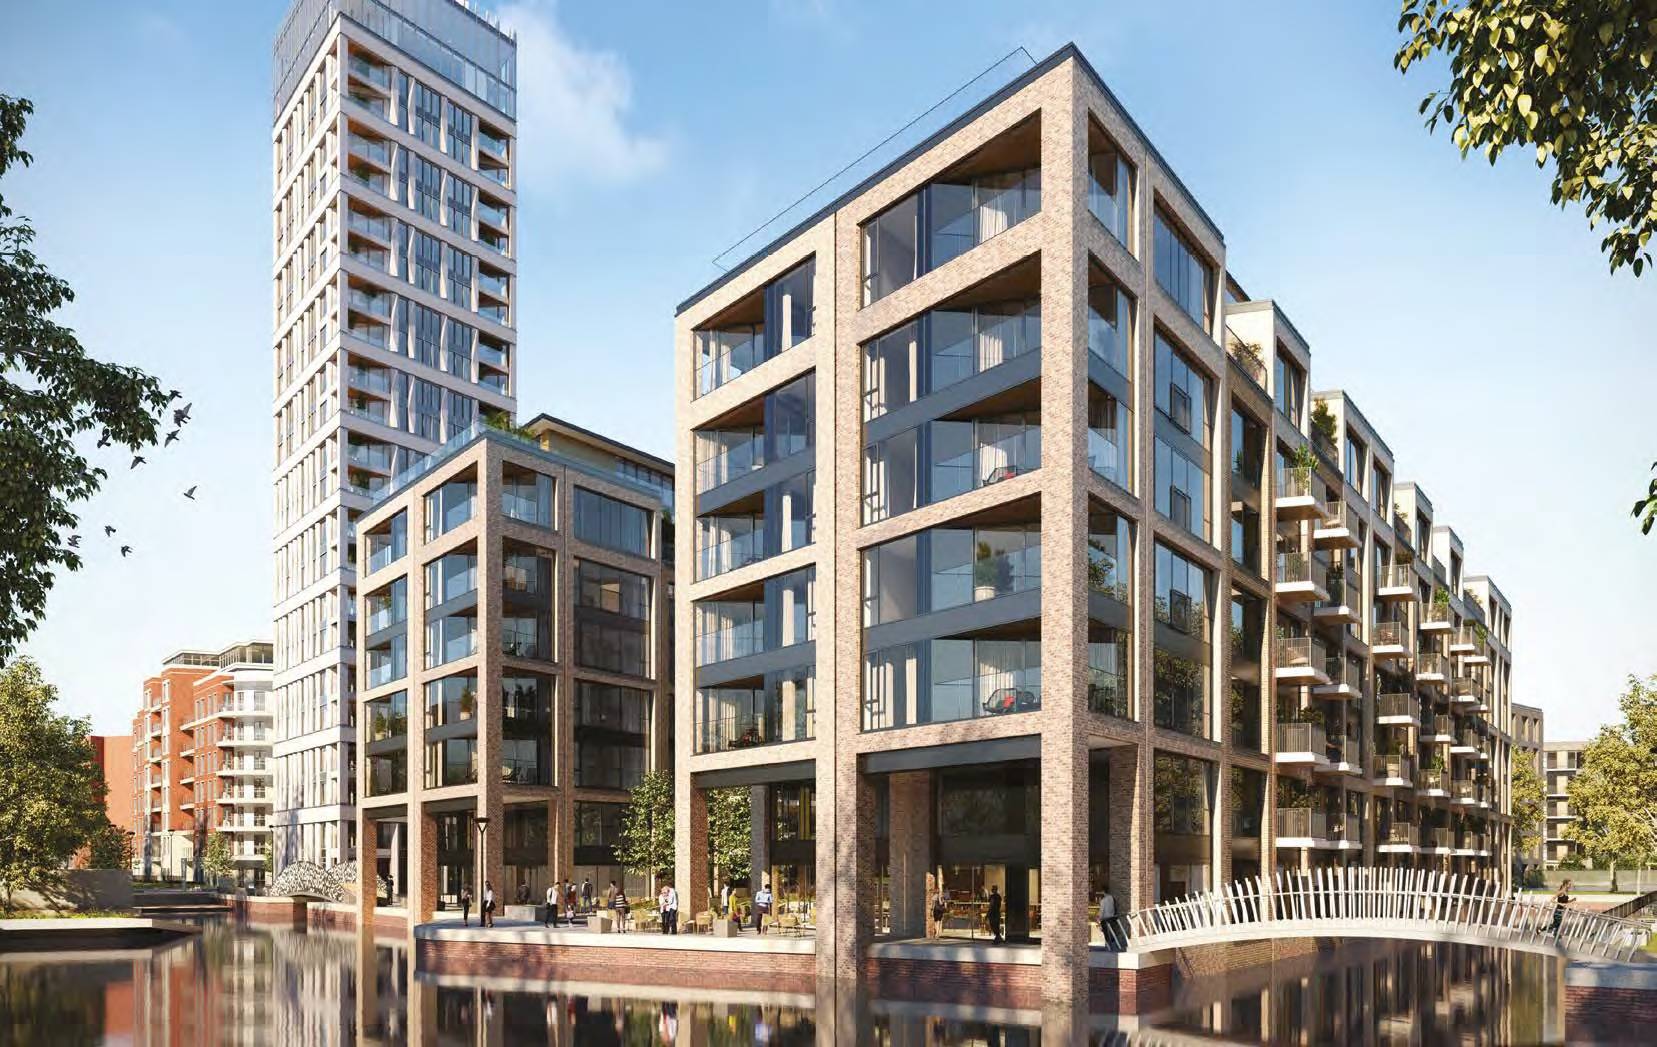 Chelsea Riverside - New Development - Completion Q4 2019